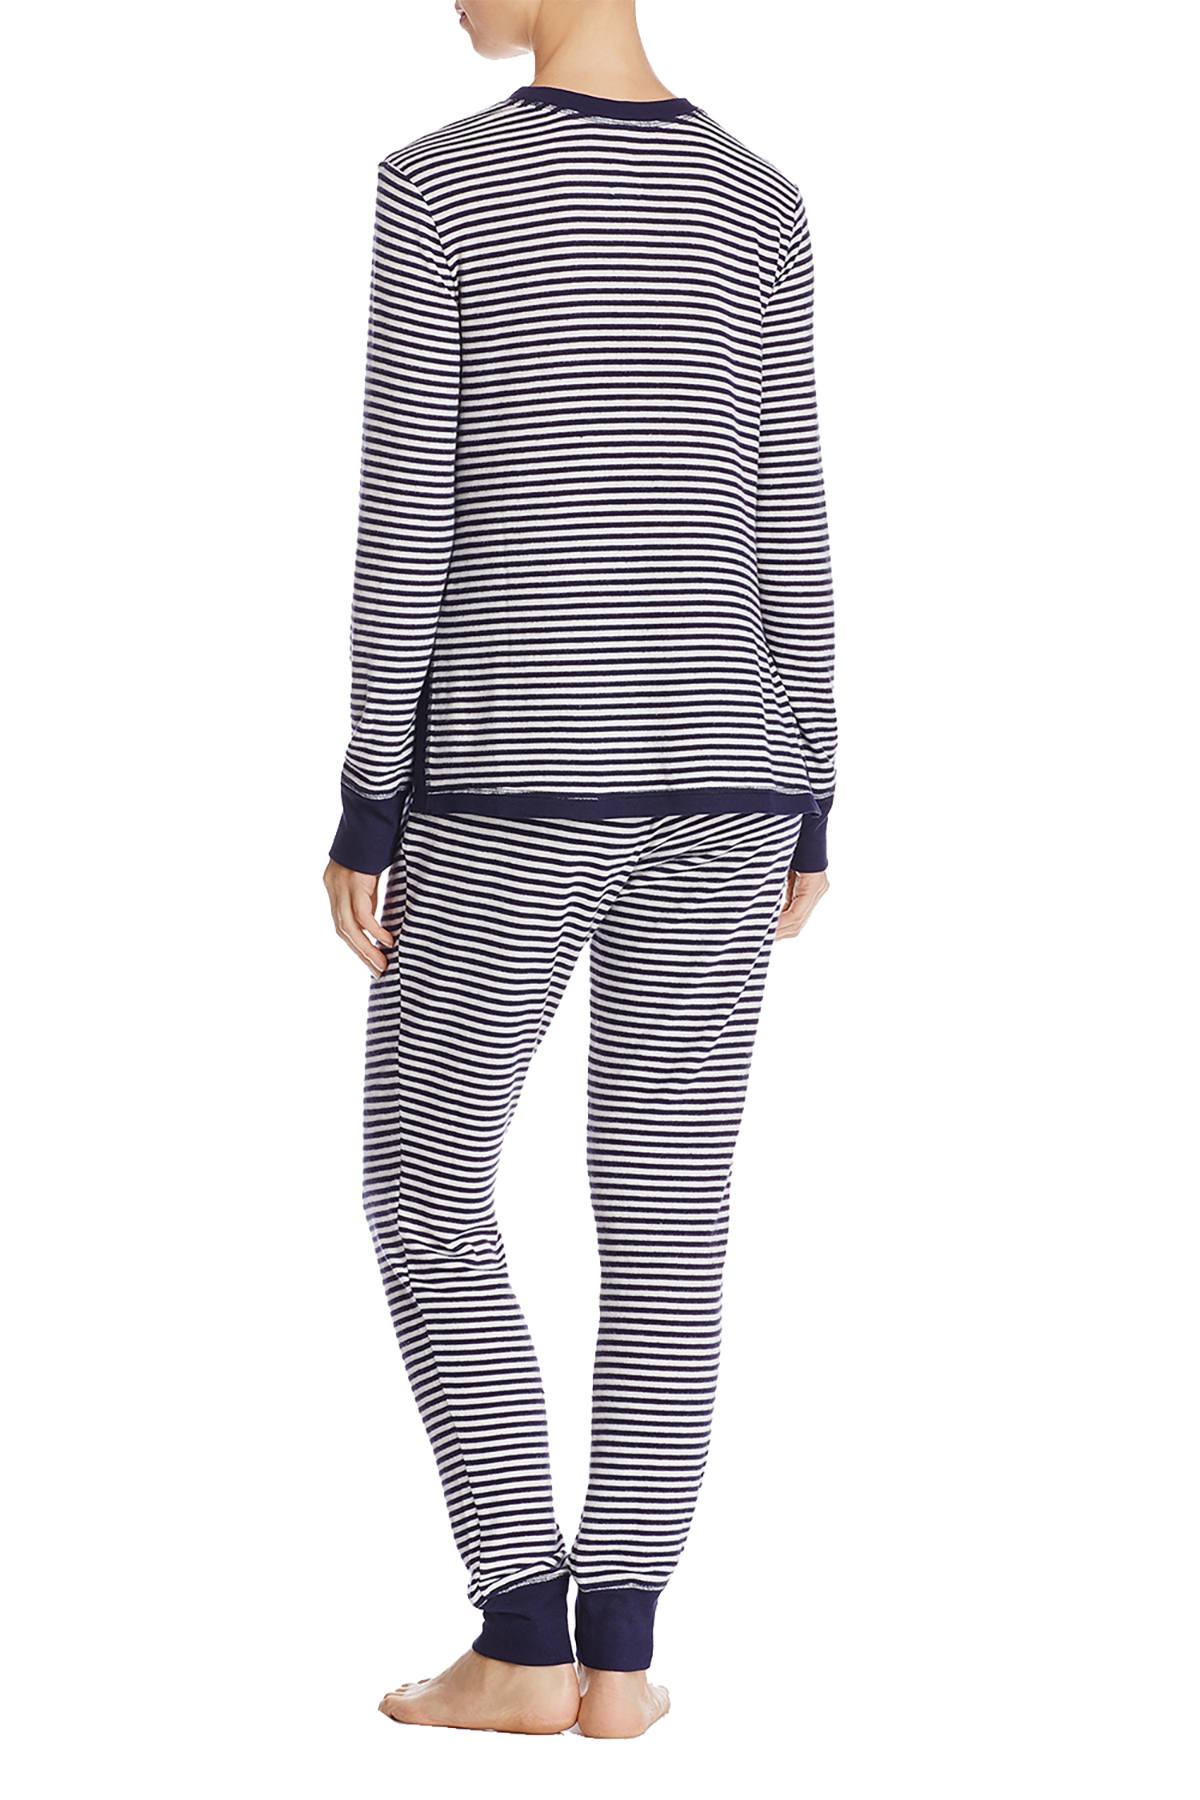 Jane & Bleeker Bloomie's Navy-Striped Exclusive Pajama Set